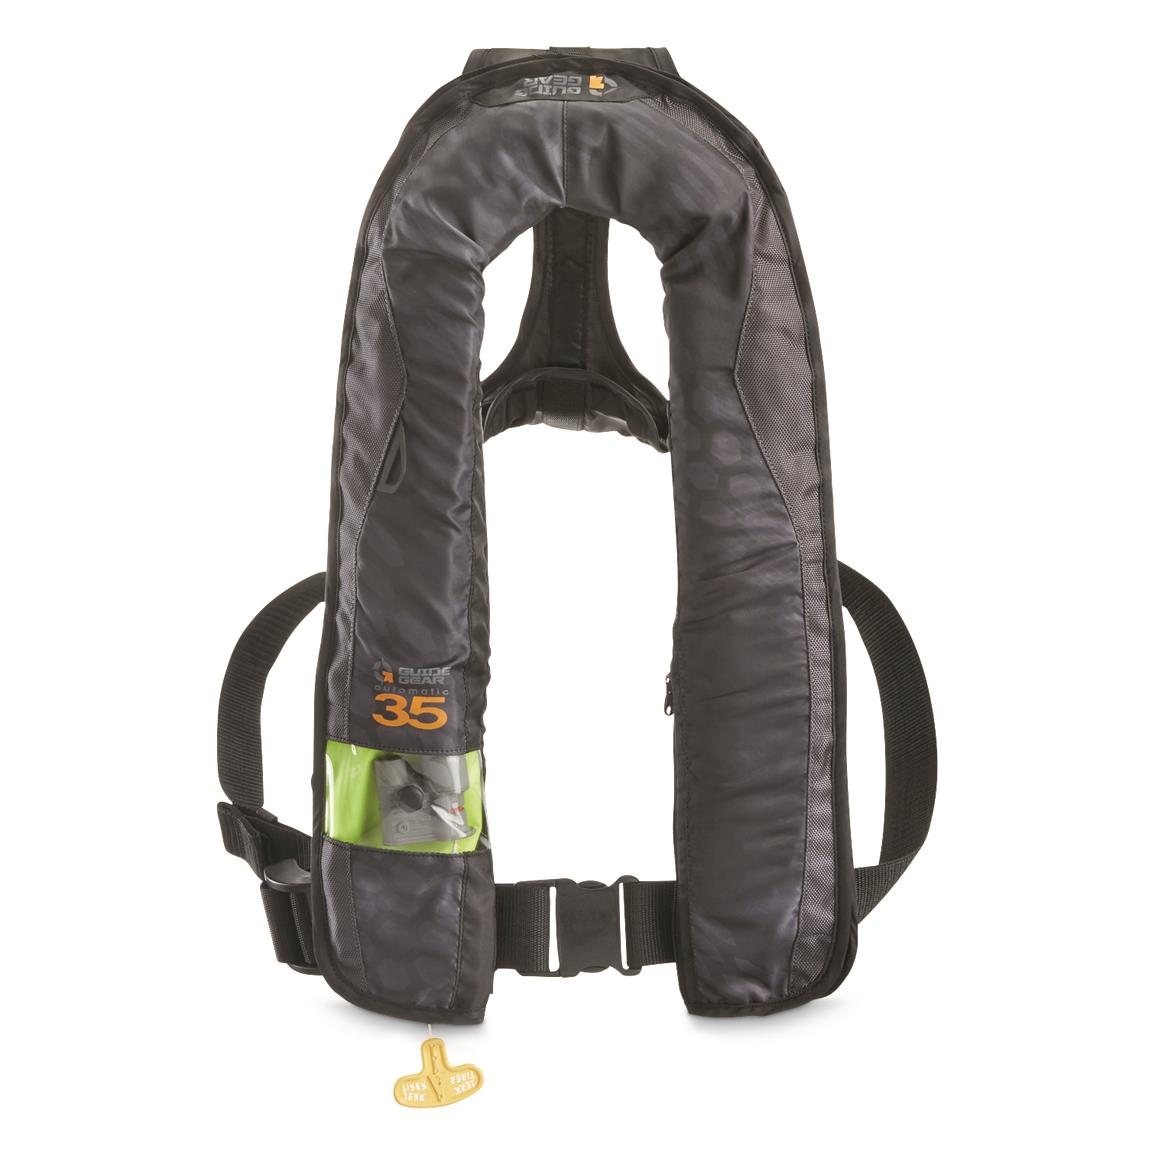 - Automatic / Manual Inflatable Life Jacket 13200050000415 pfd Onyx A/m-24 